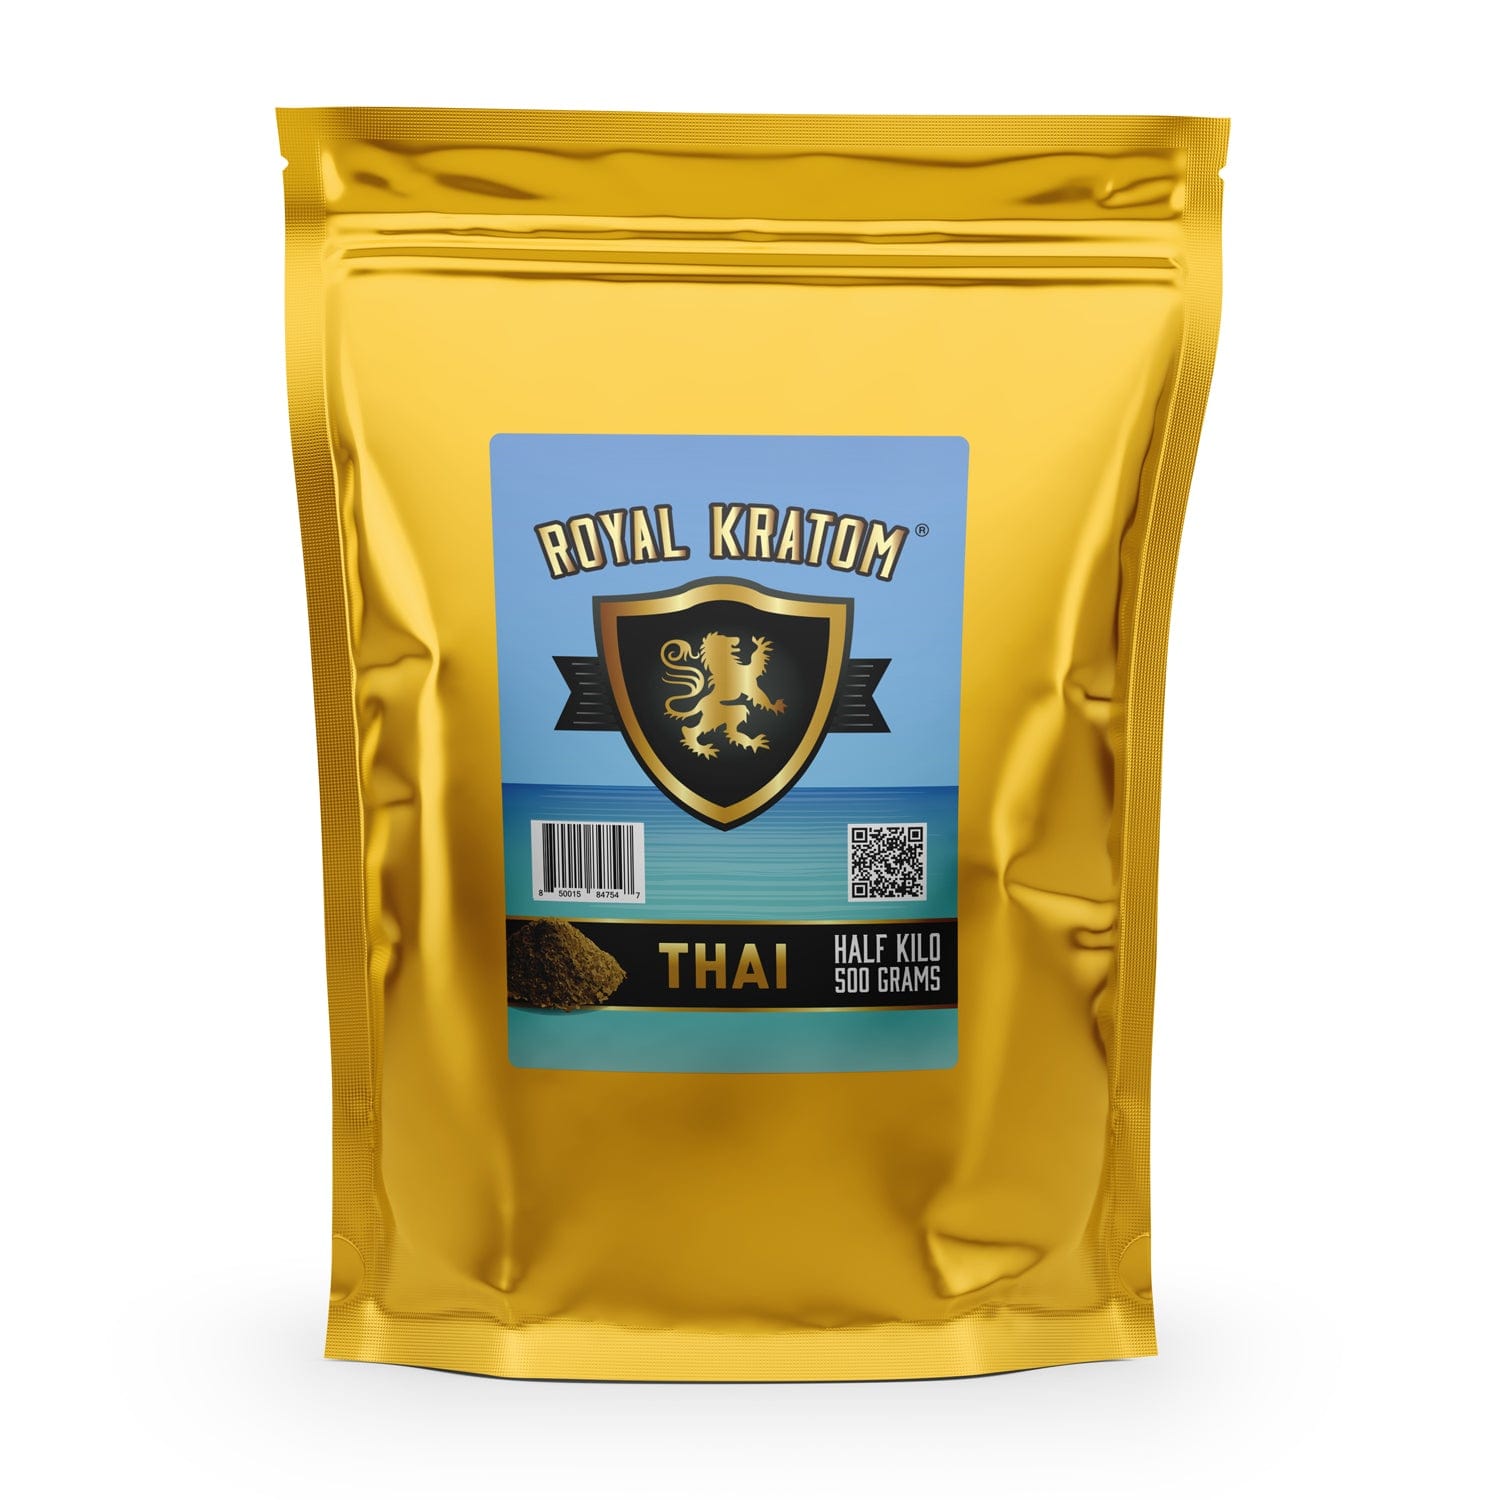 Royal Kratom Thai Kratom Powder 500 Grams Half Kilo package